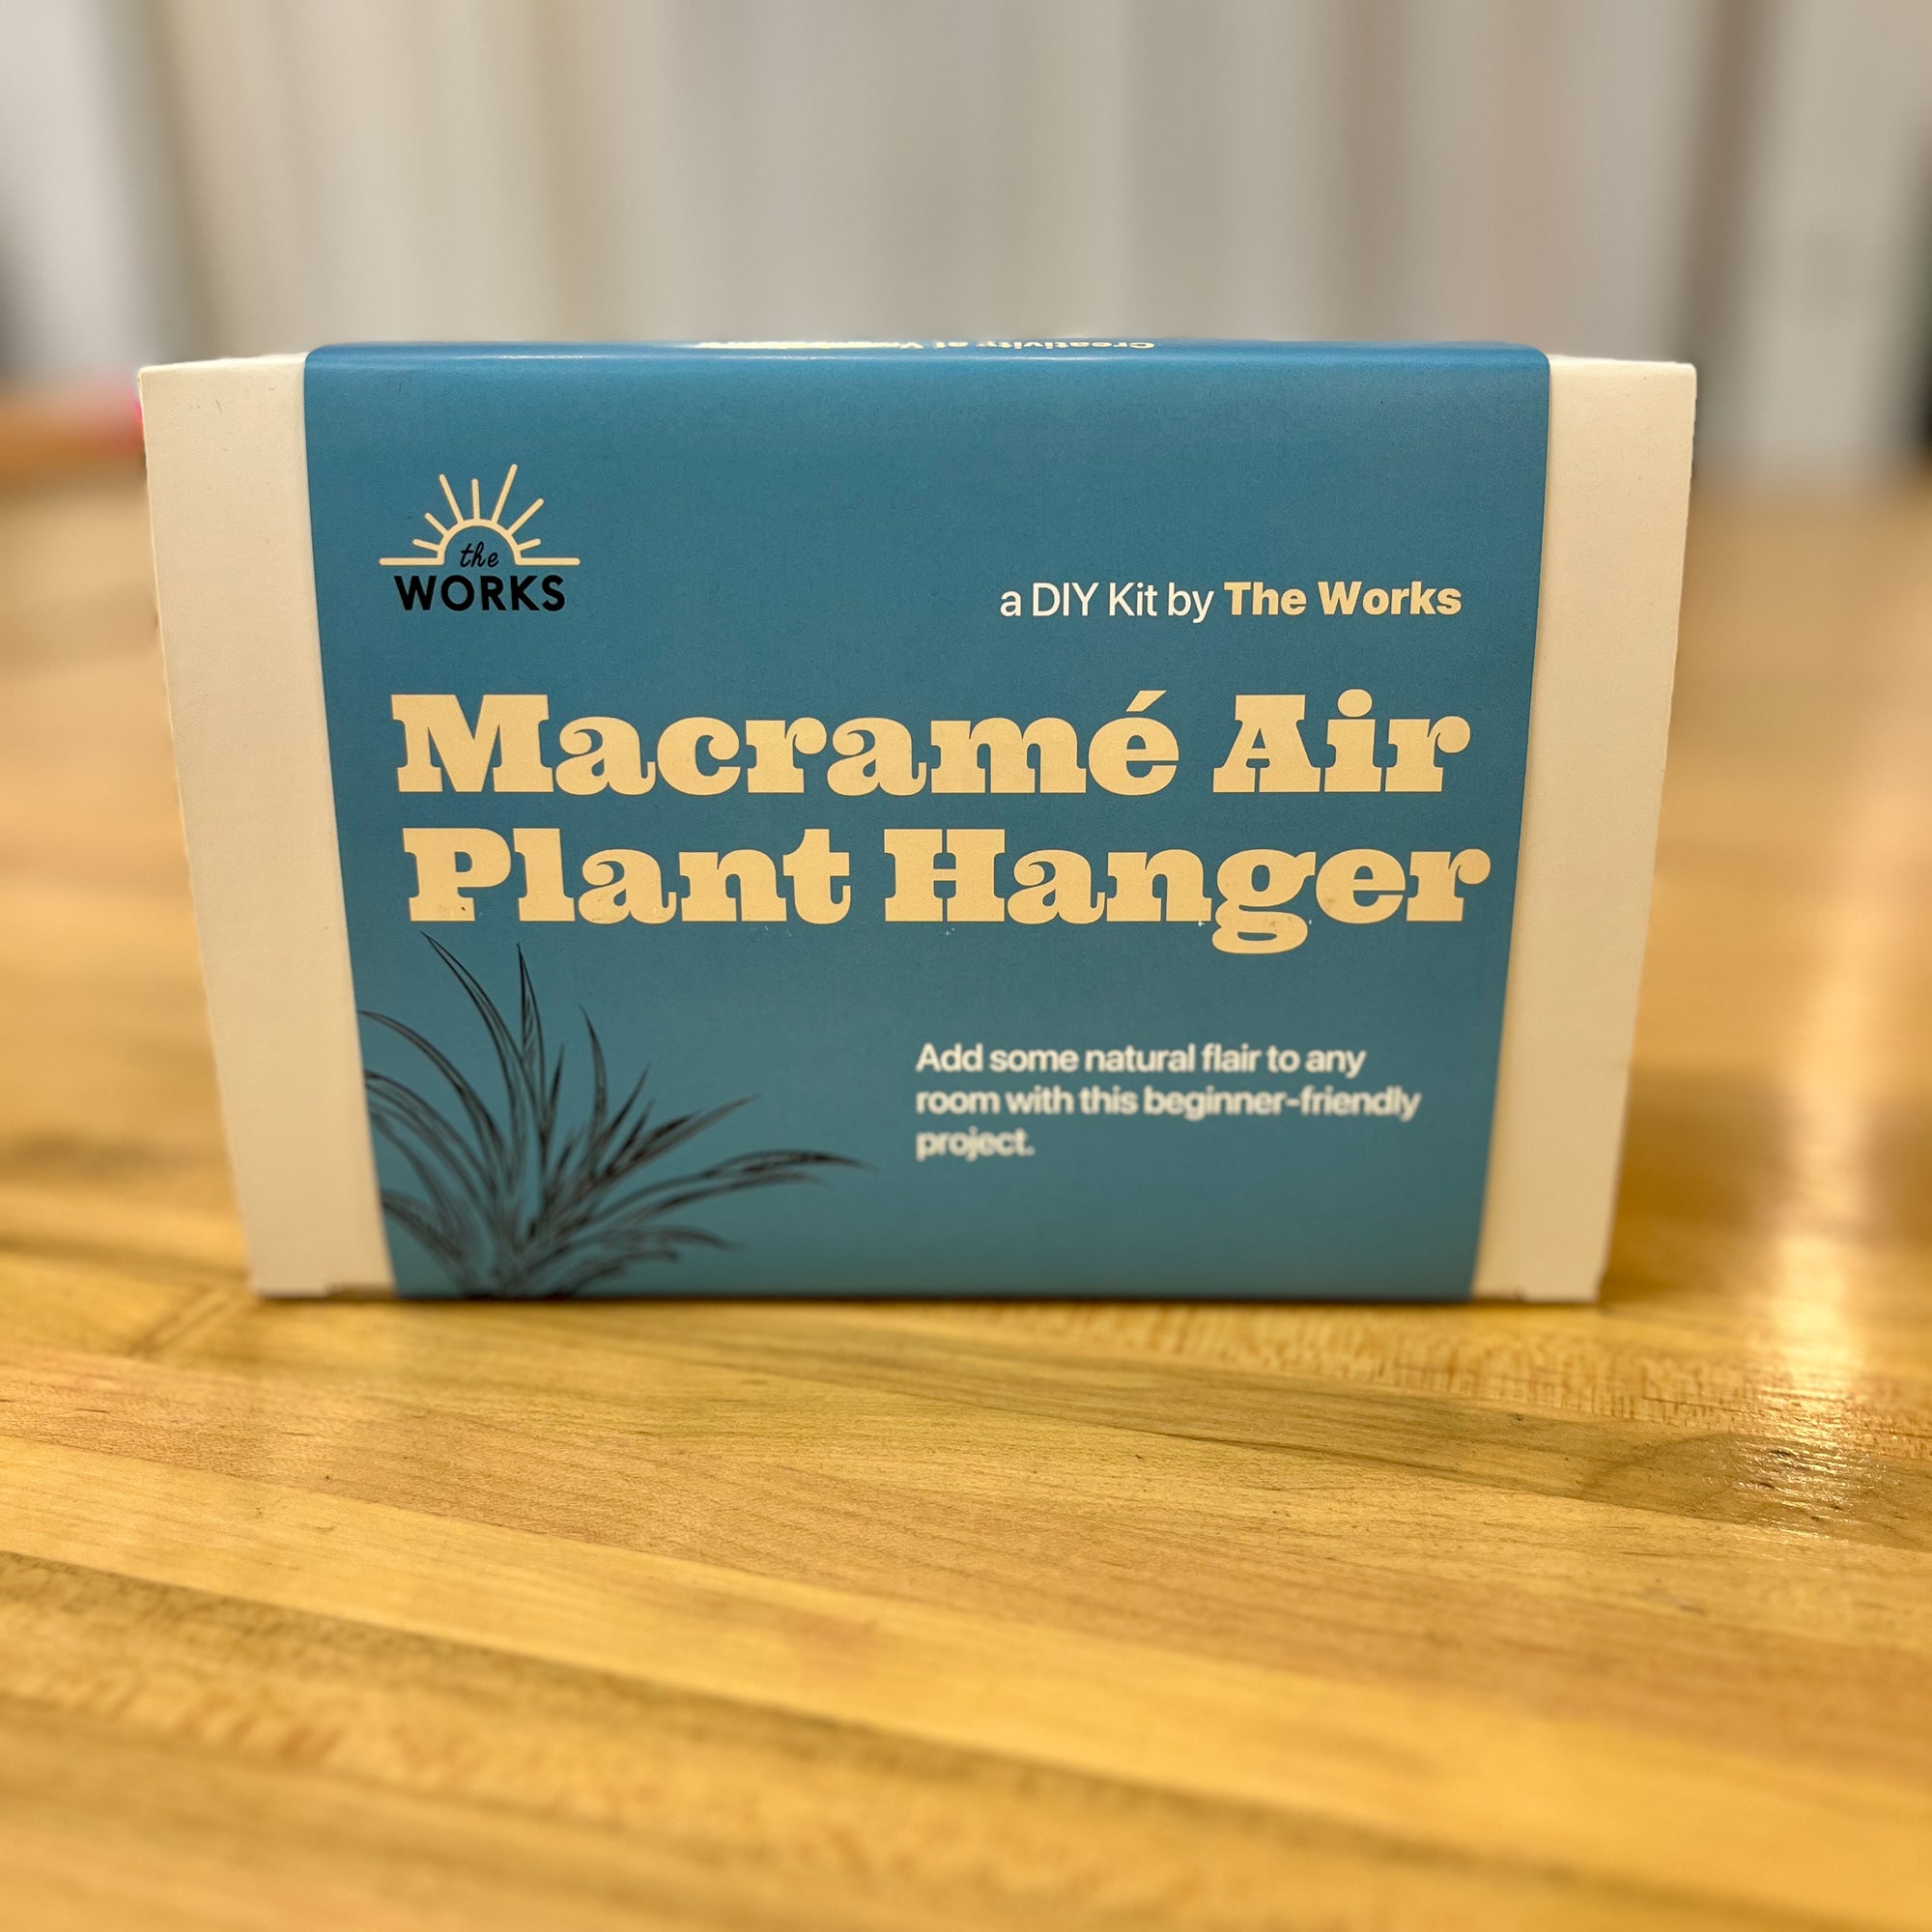 Macrame Air Plant Hangers